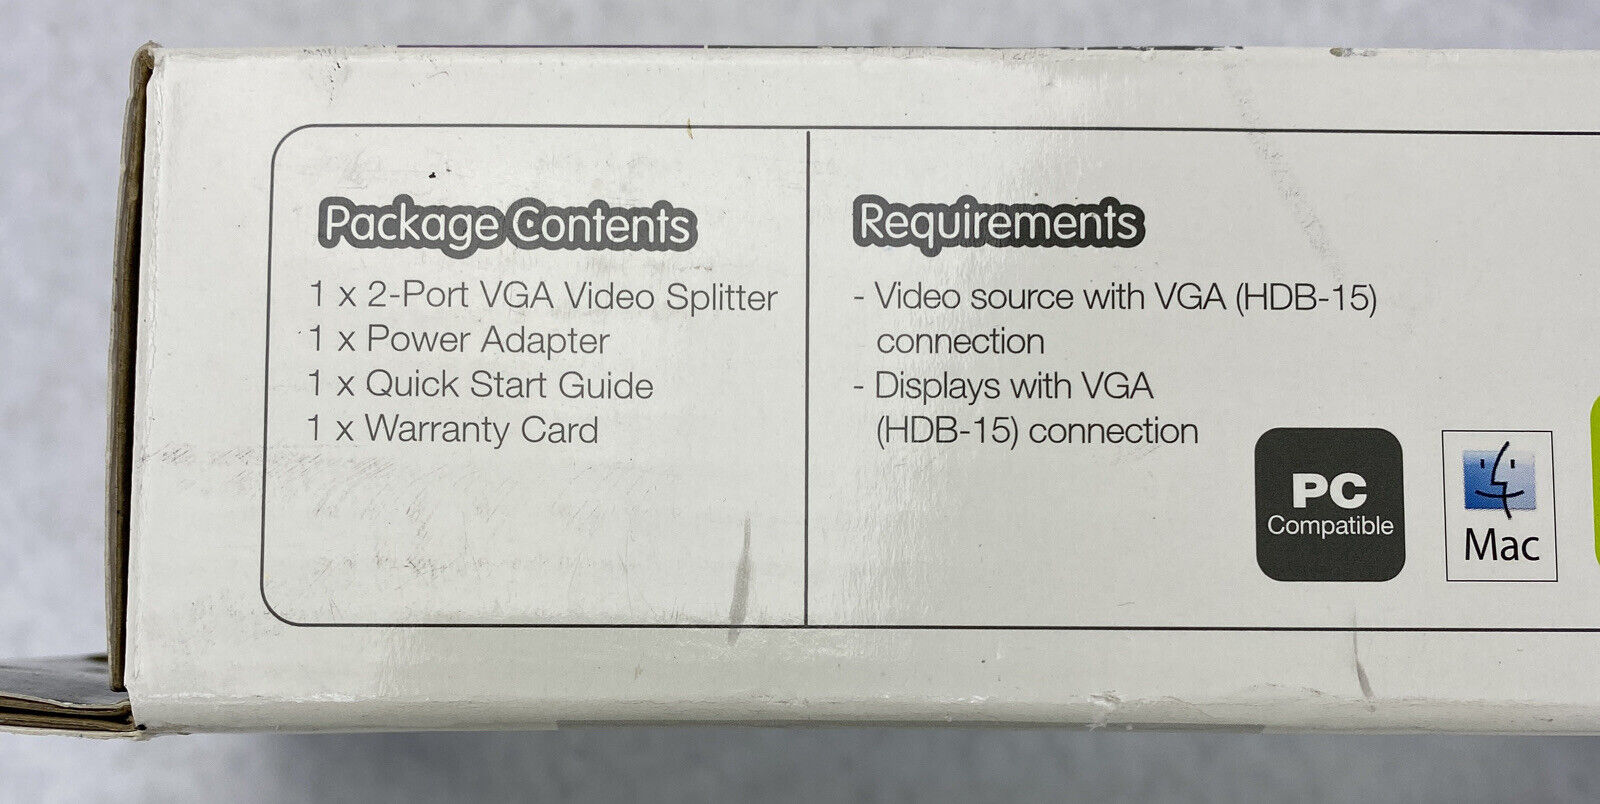 IOGEAR GVS62 2-Port VGA Video Splitter for Analog Displays NEW